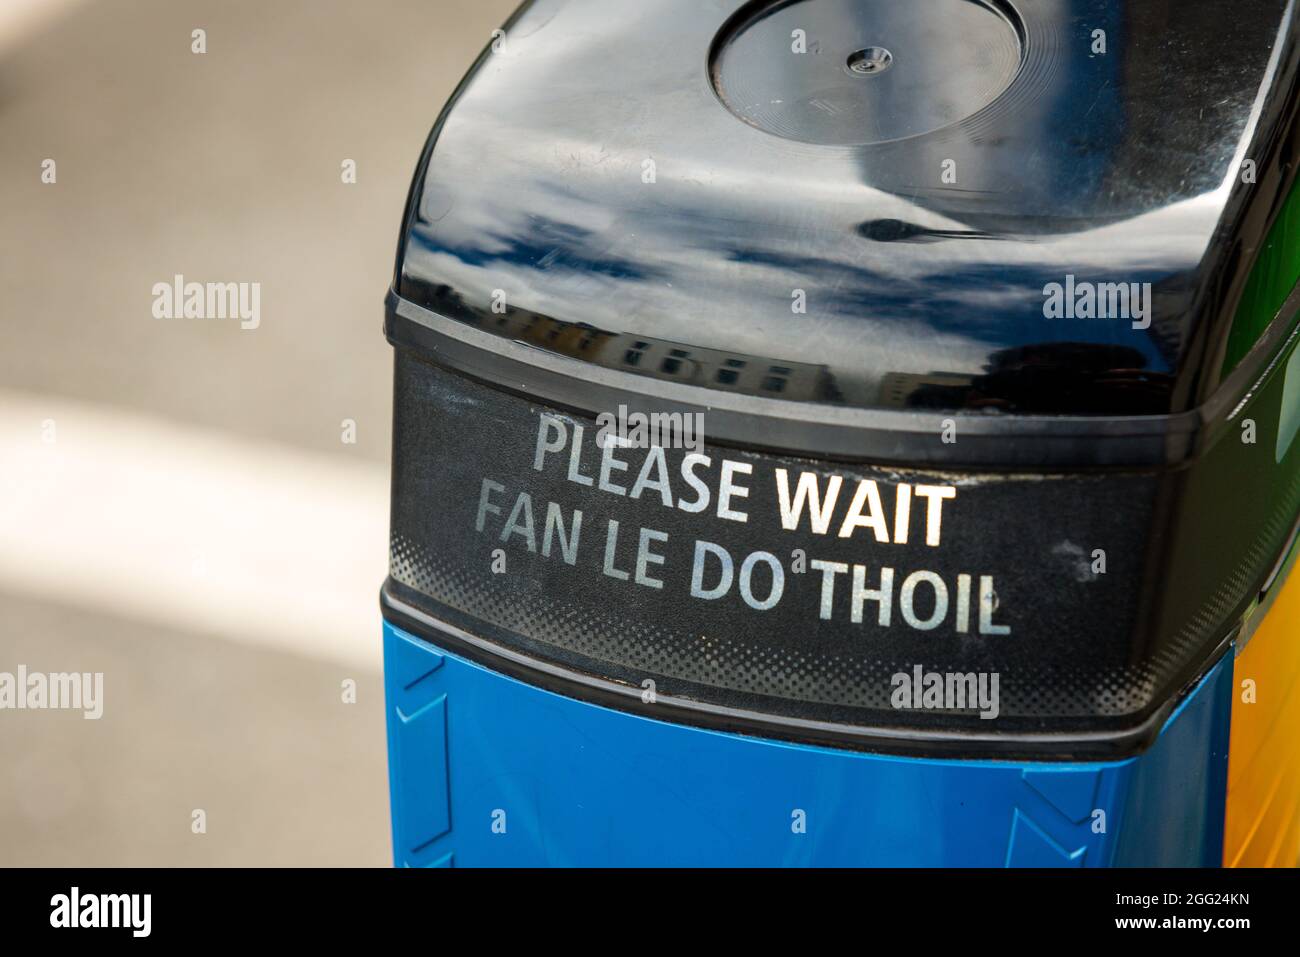 Please wait crosswalk button for pedestrians crossing, bilingual writing in English and Irish Gaelic, Ireland Stock Photo